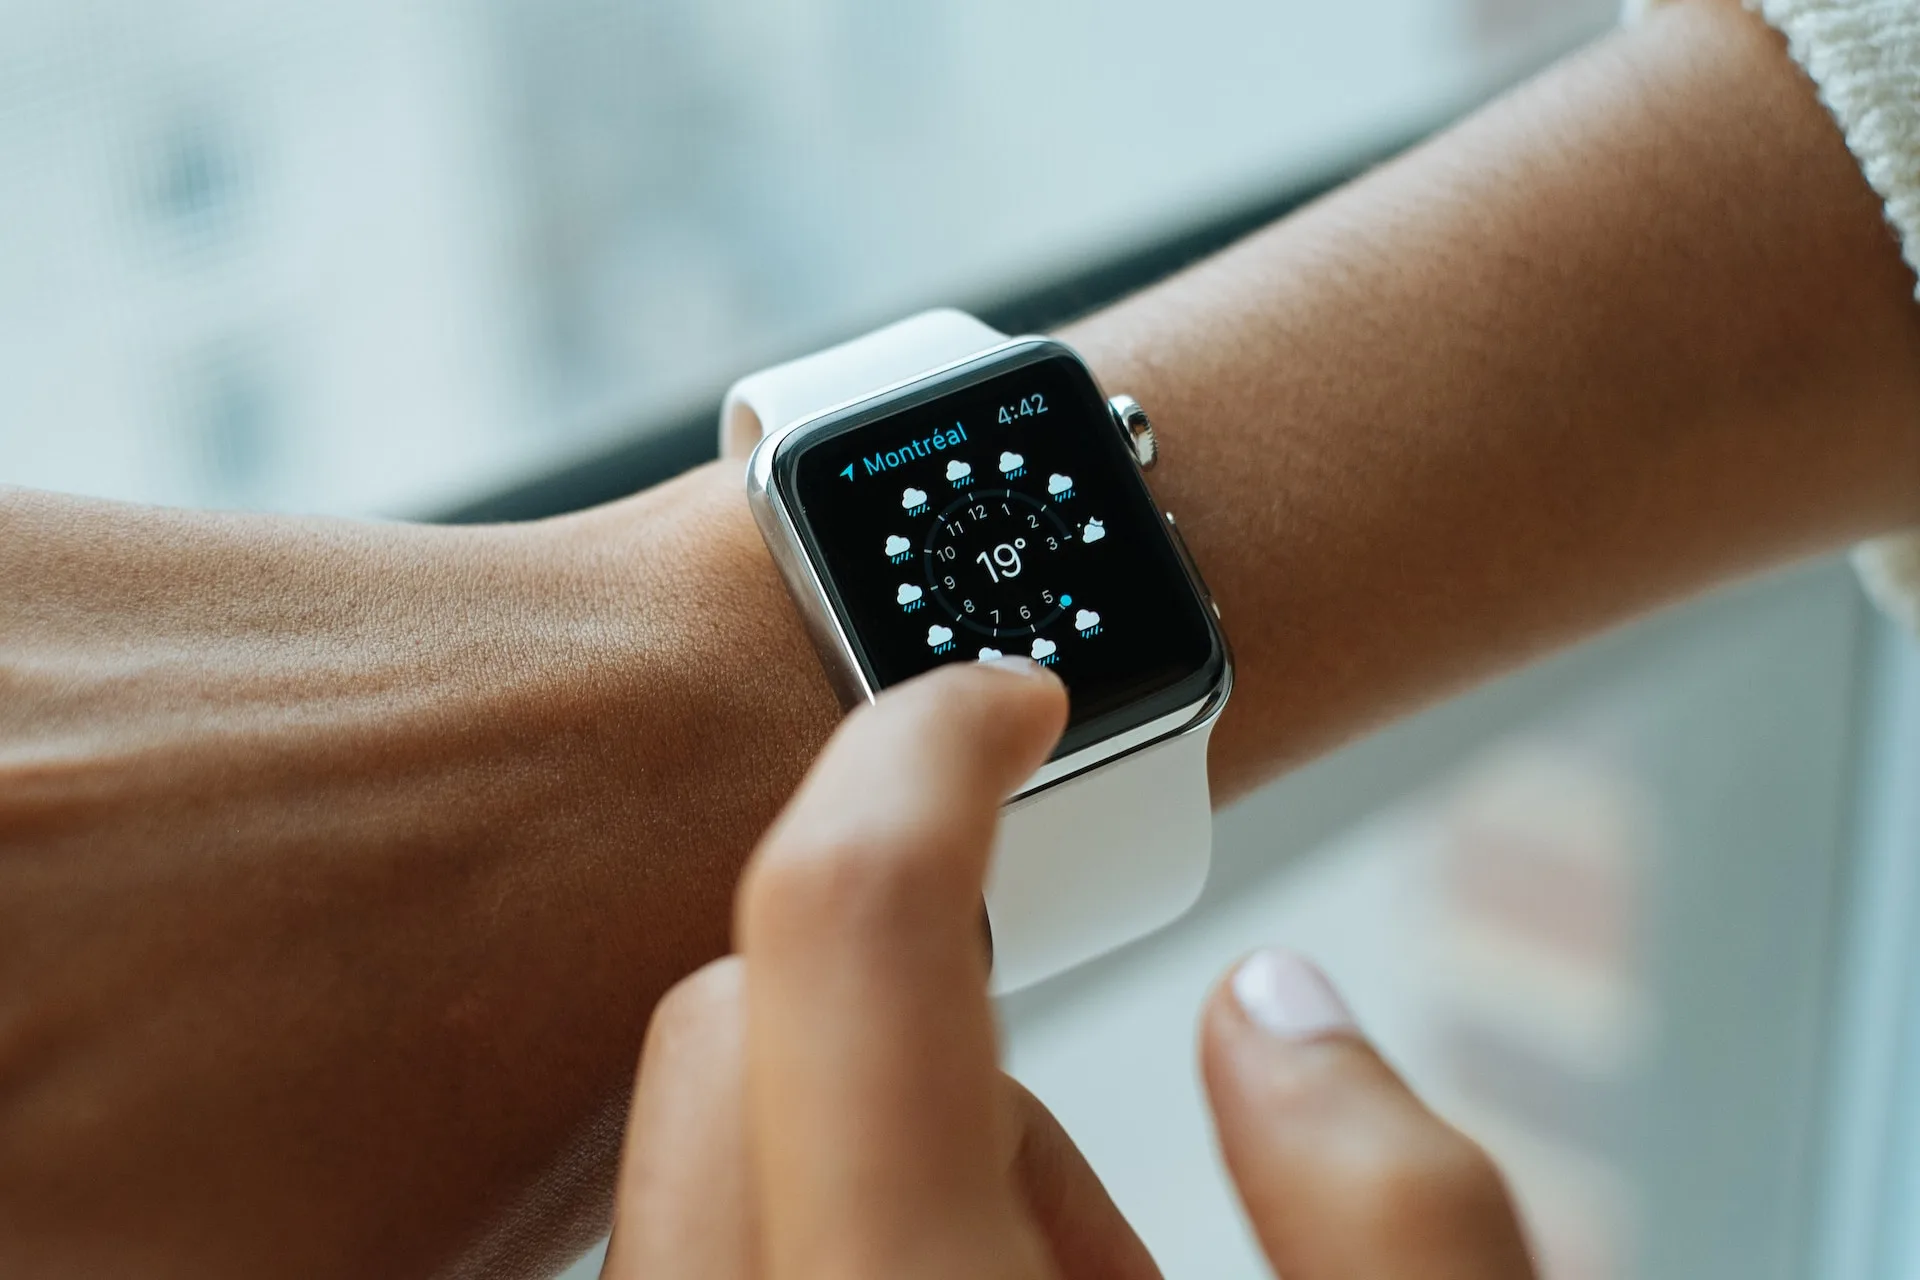 Apple Watch capable of detecting Parkinson’s disease?